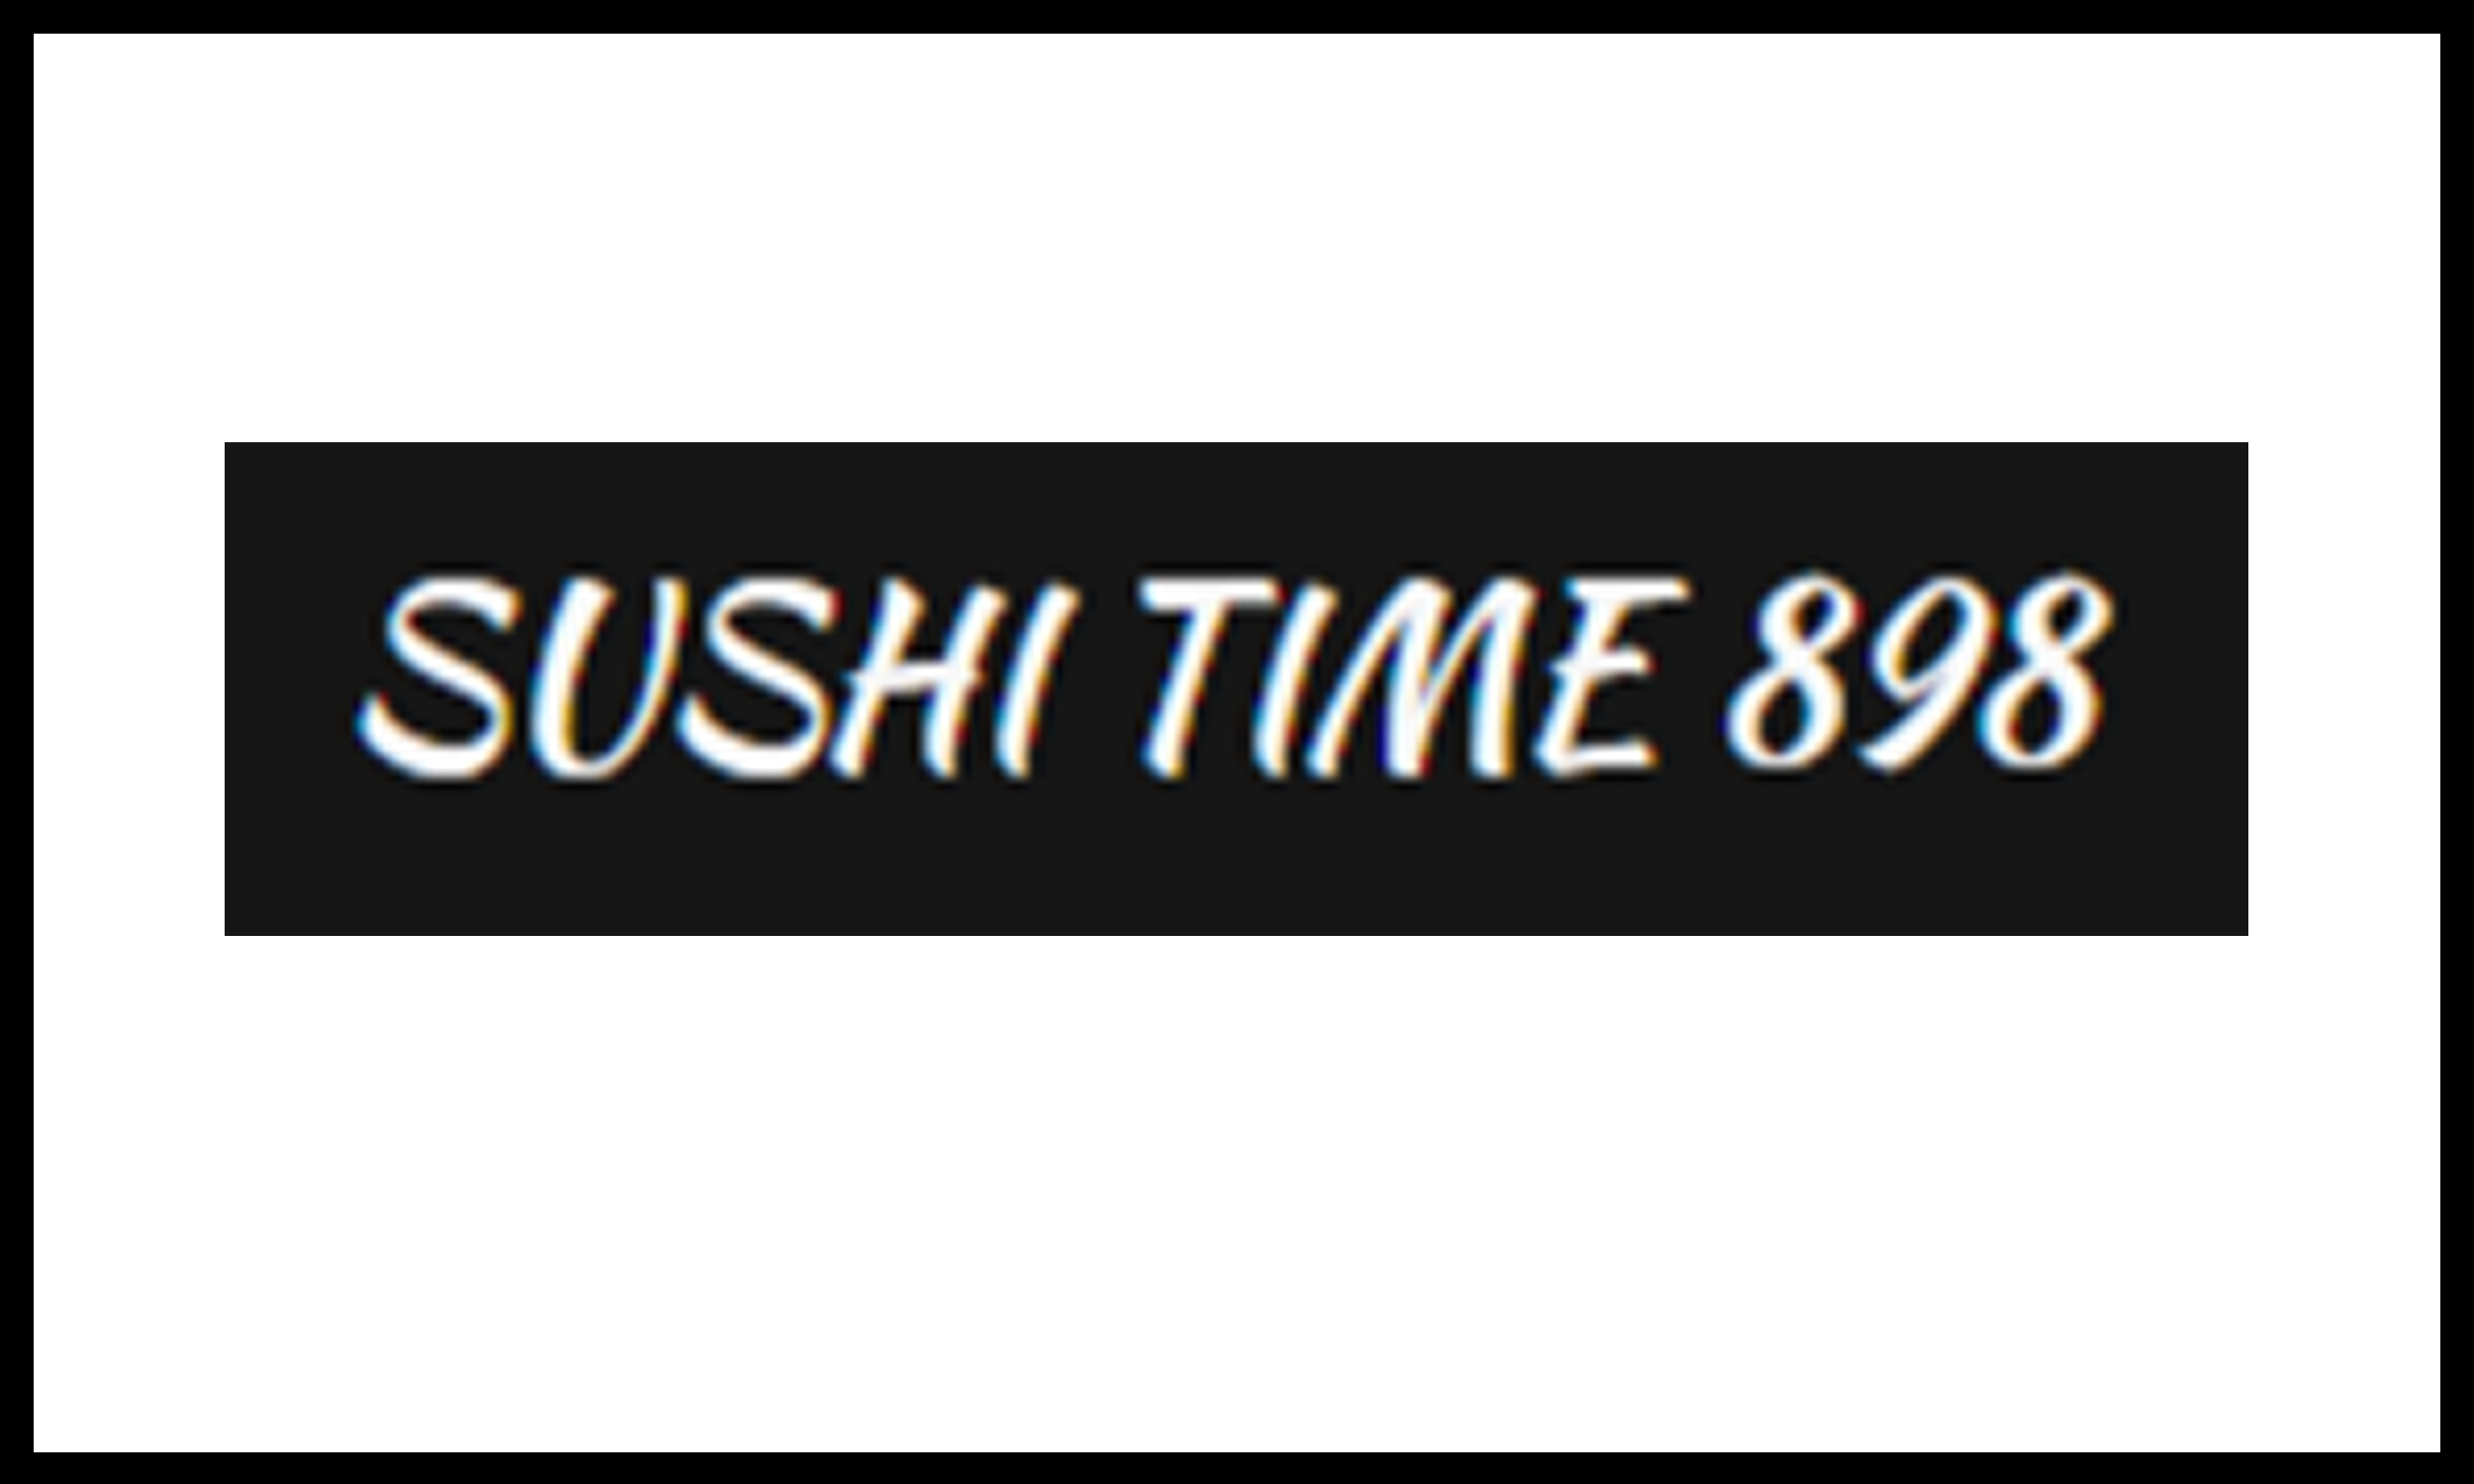 Sushi Time 898